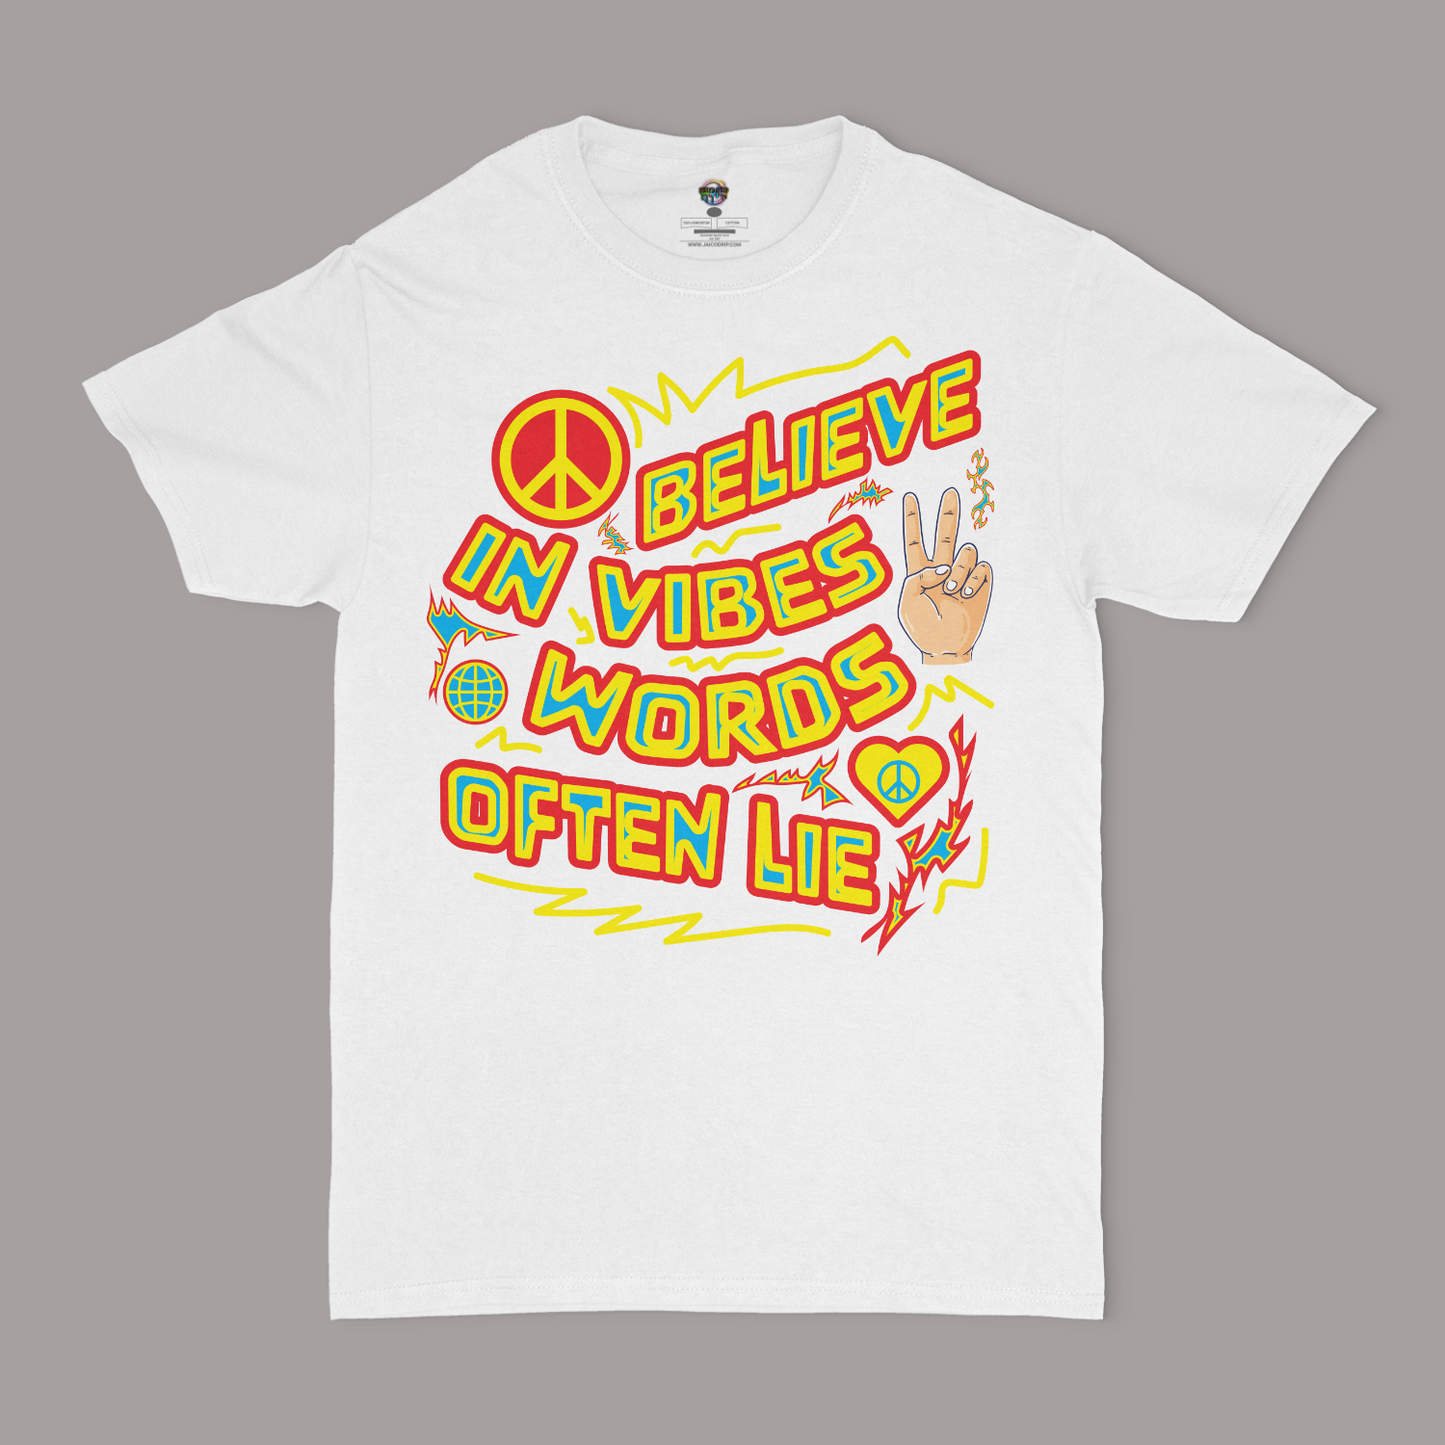 Believe In Vibes, Words Often Lie Graphic Unisex T-shirt